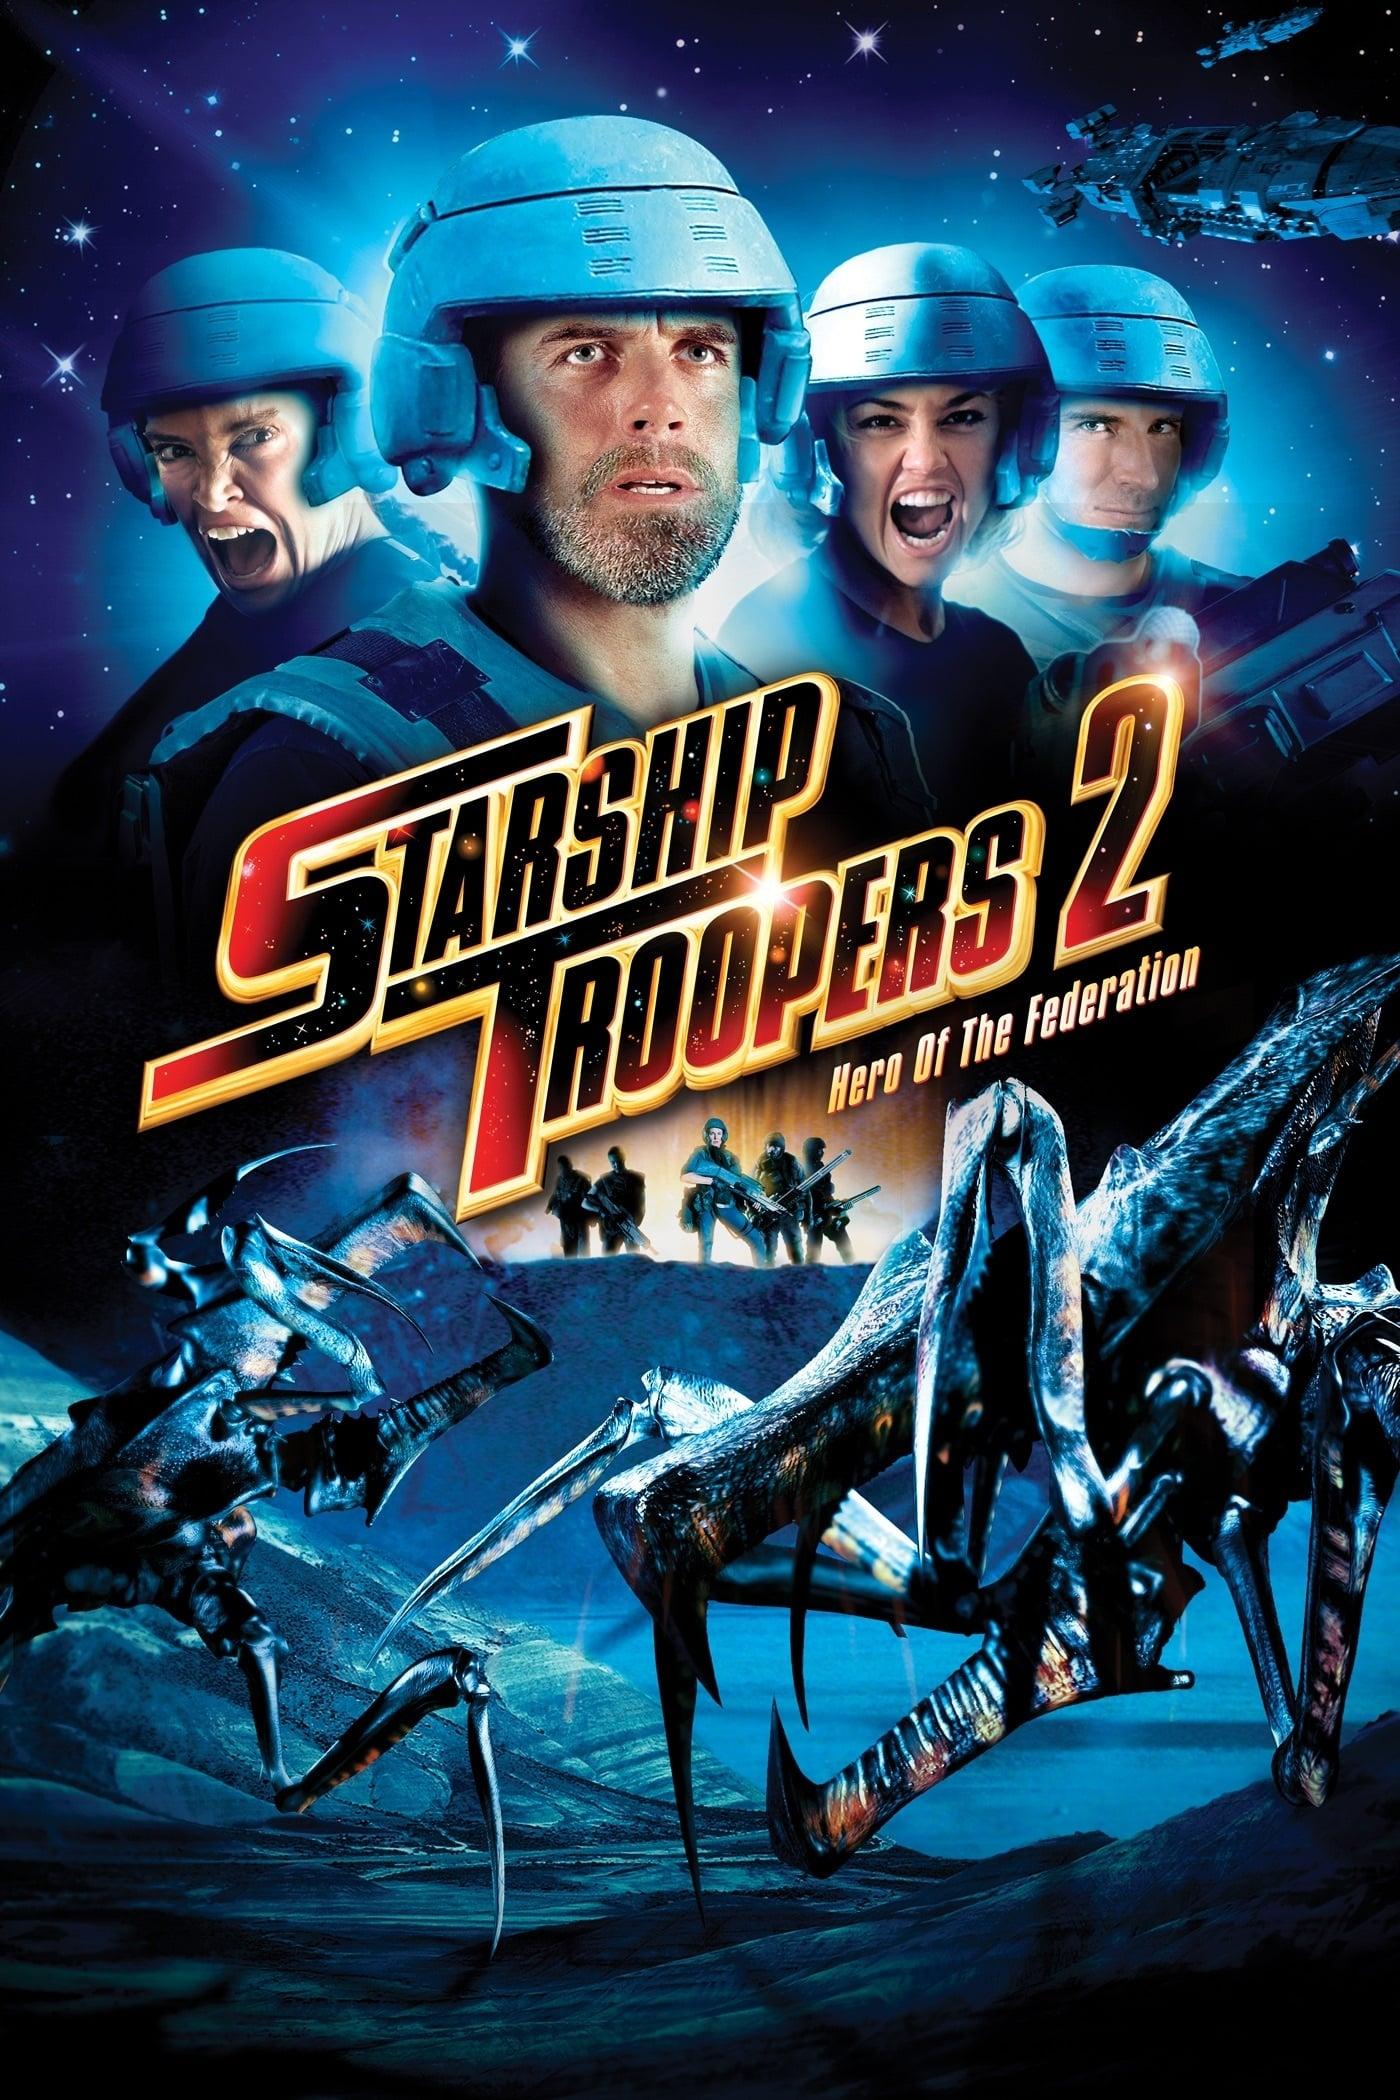 Starship Troopers 2: Held der Föderation poster